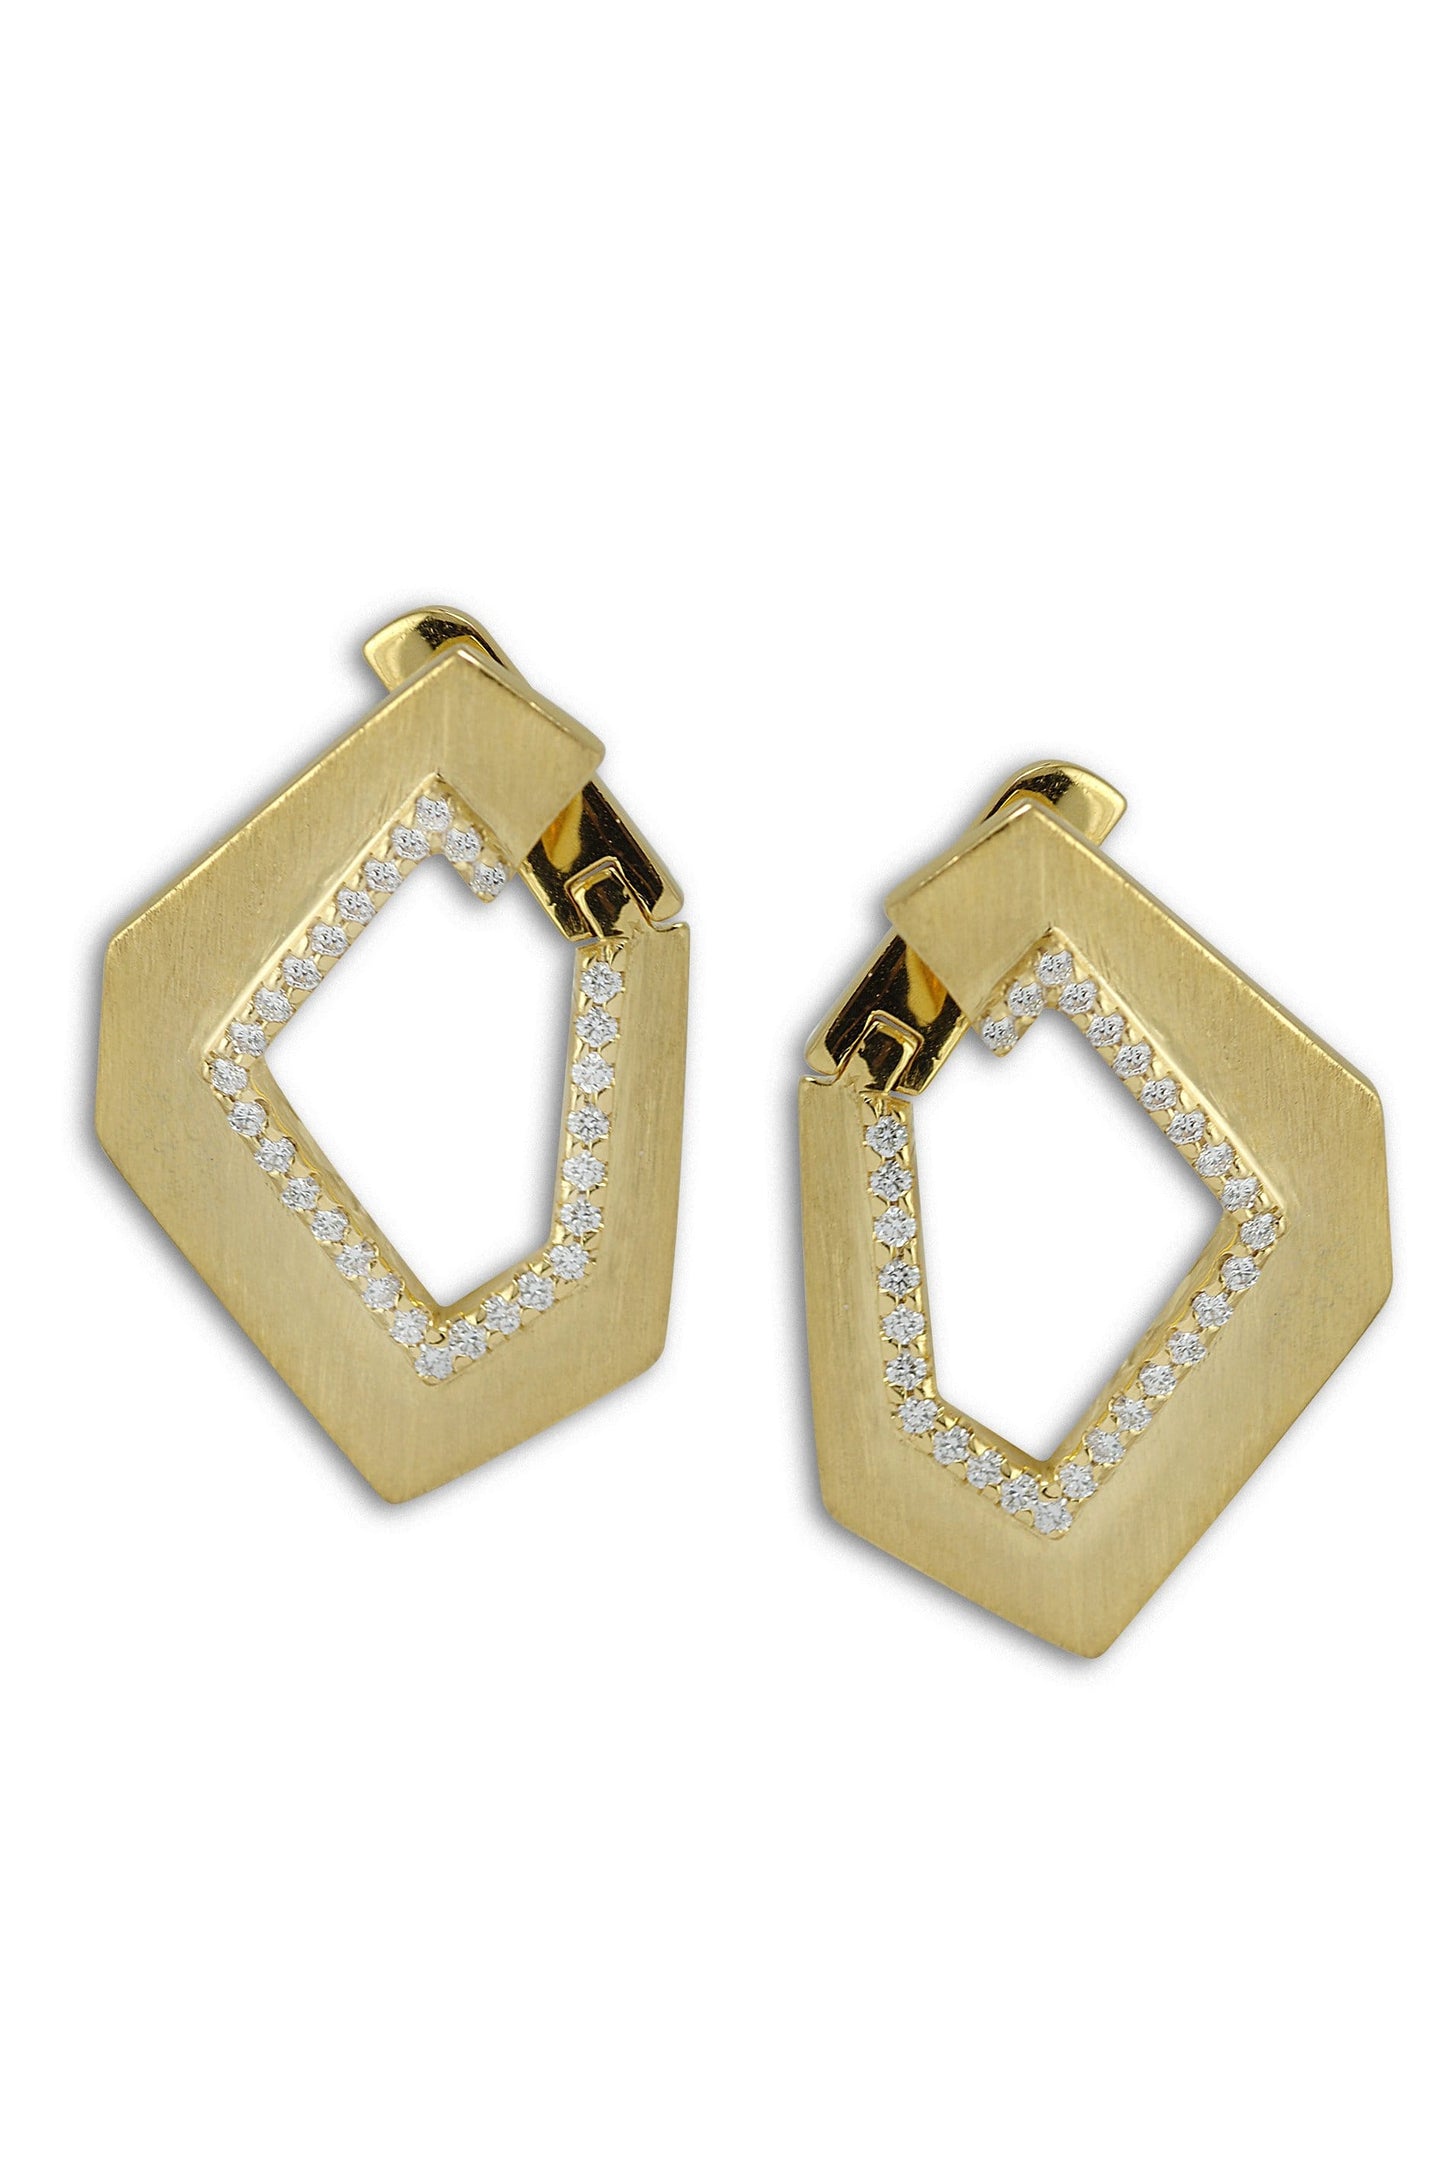 KAVANT & SHARART-Origami Brushed Link No. 5 Diamond Earrings-YELLOW GOLD